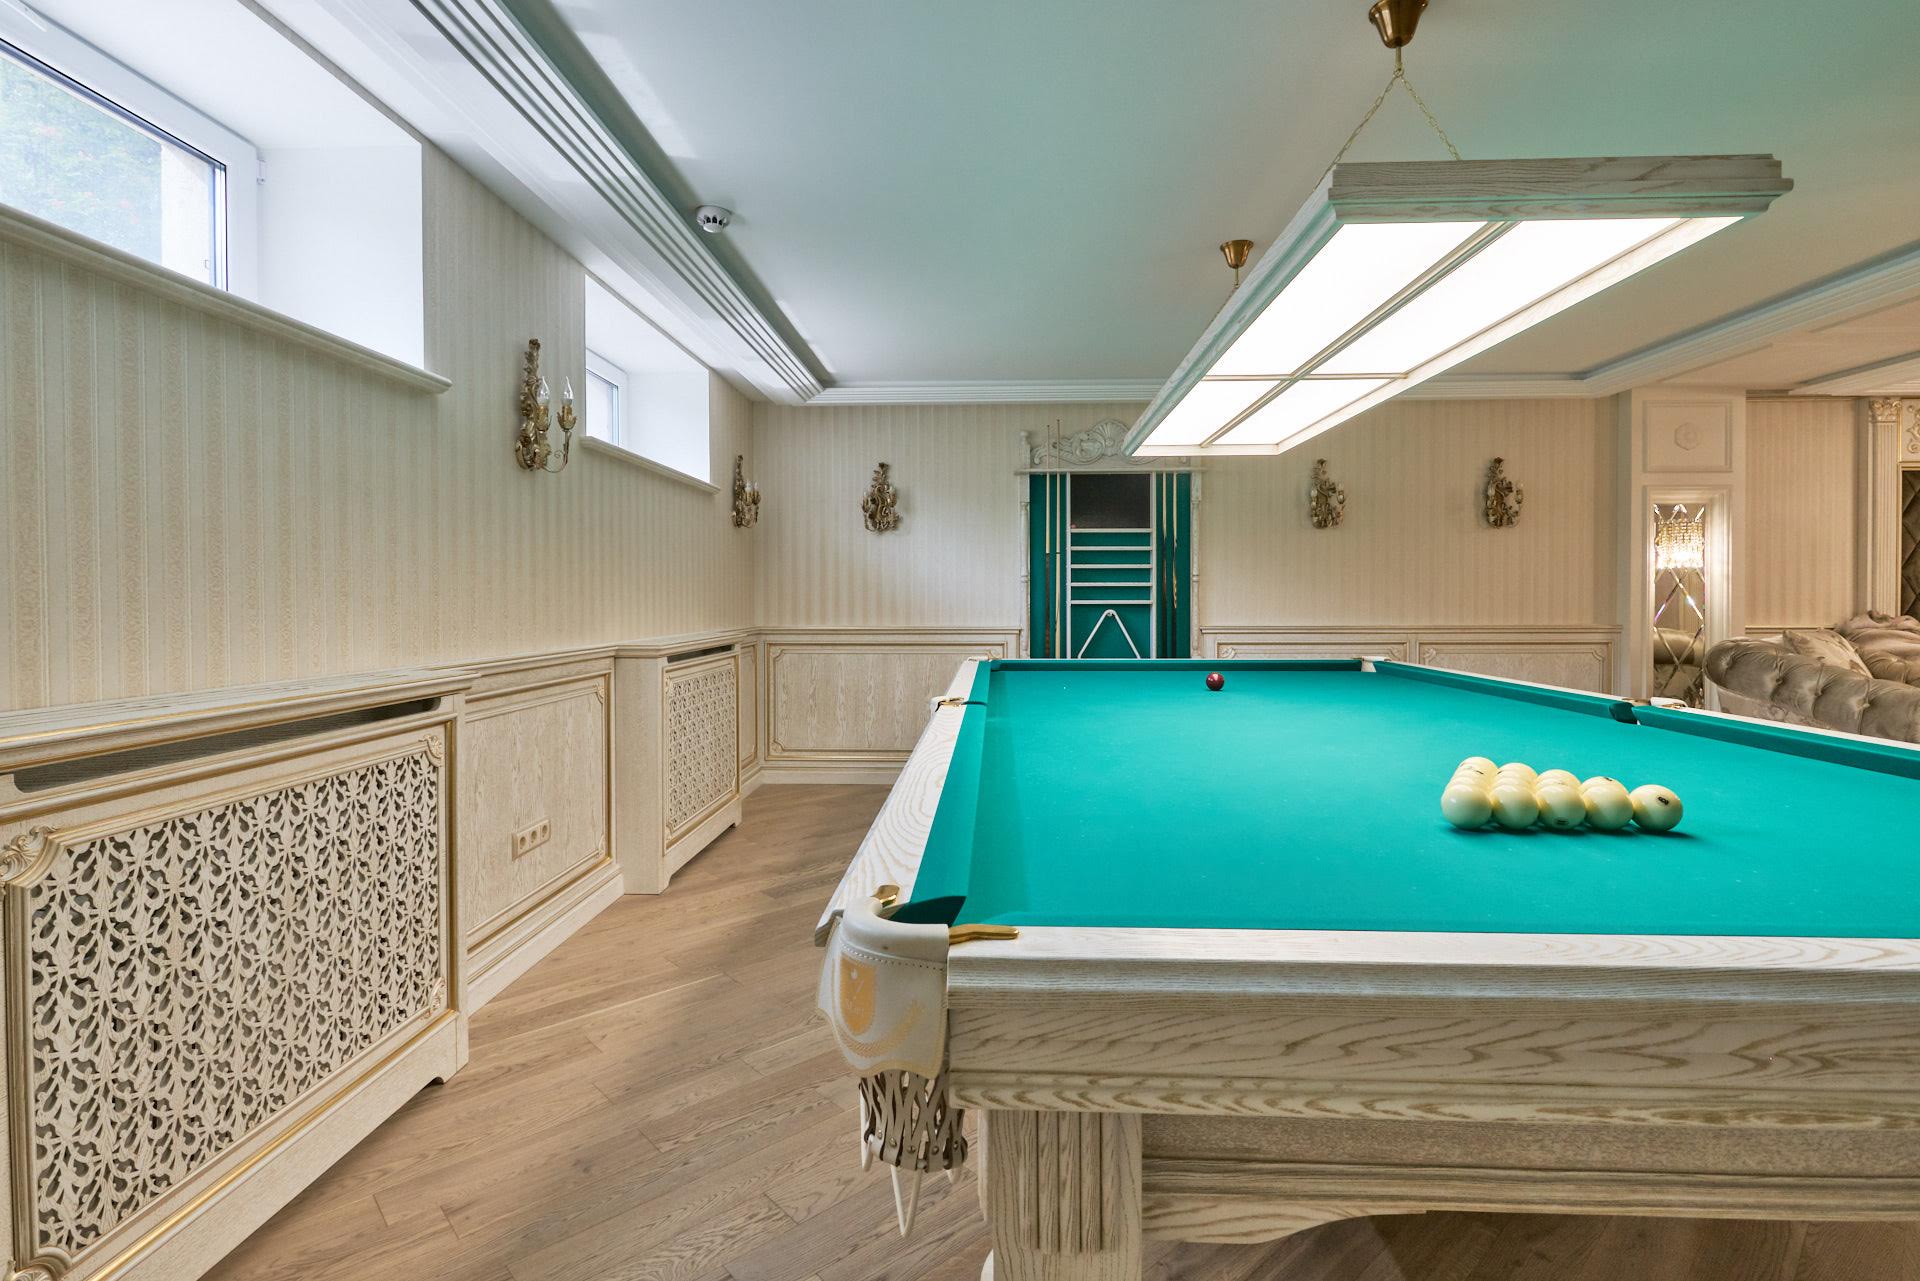 Living room design, billiard table